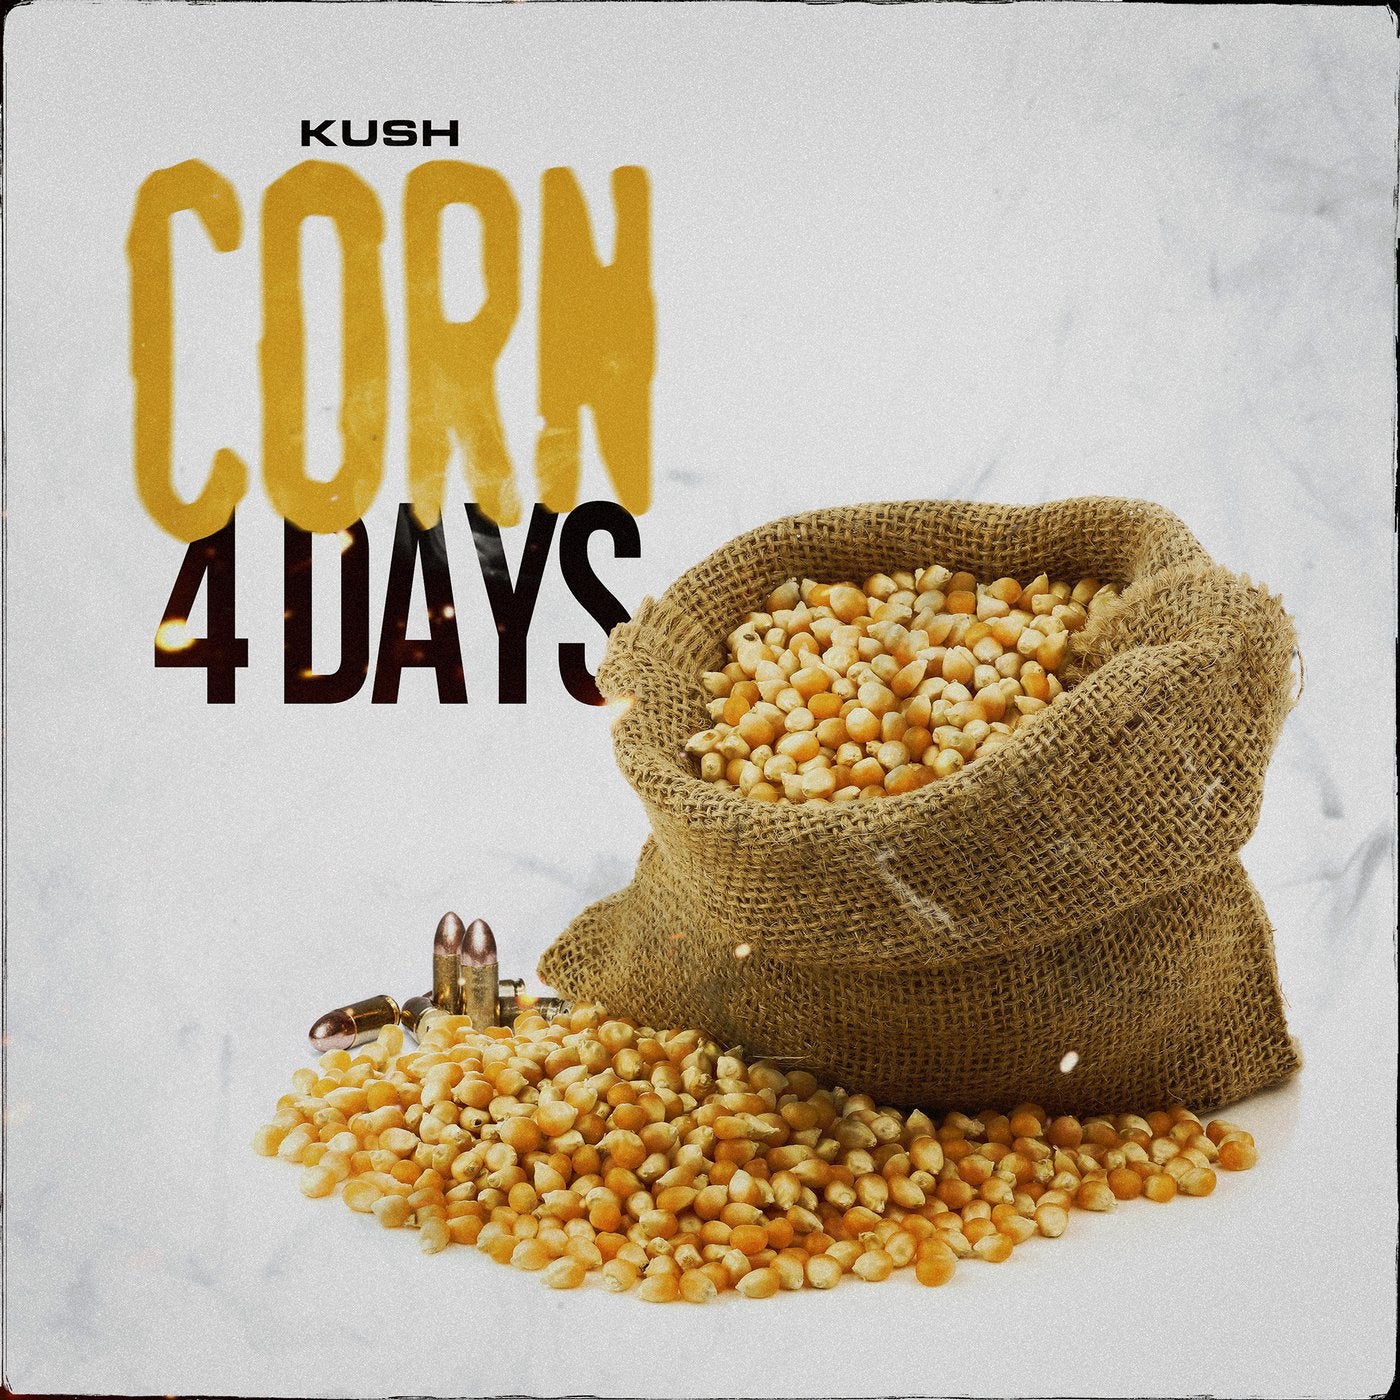 Corn песни. Corn Day. Корн альбомы. Corn песня. Dirty Corn песня.